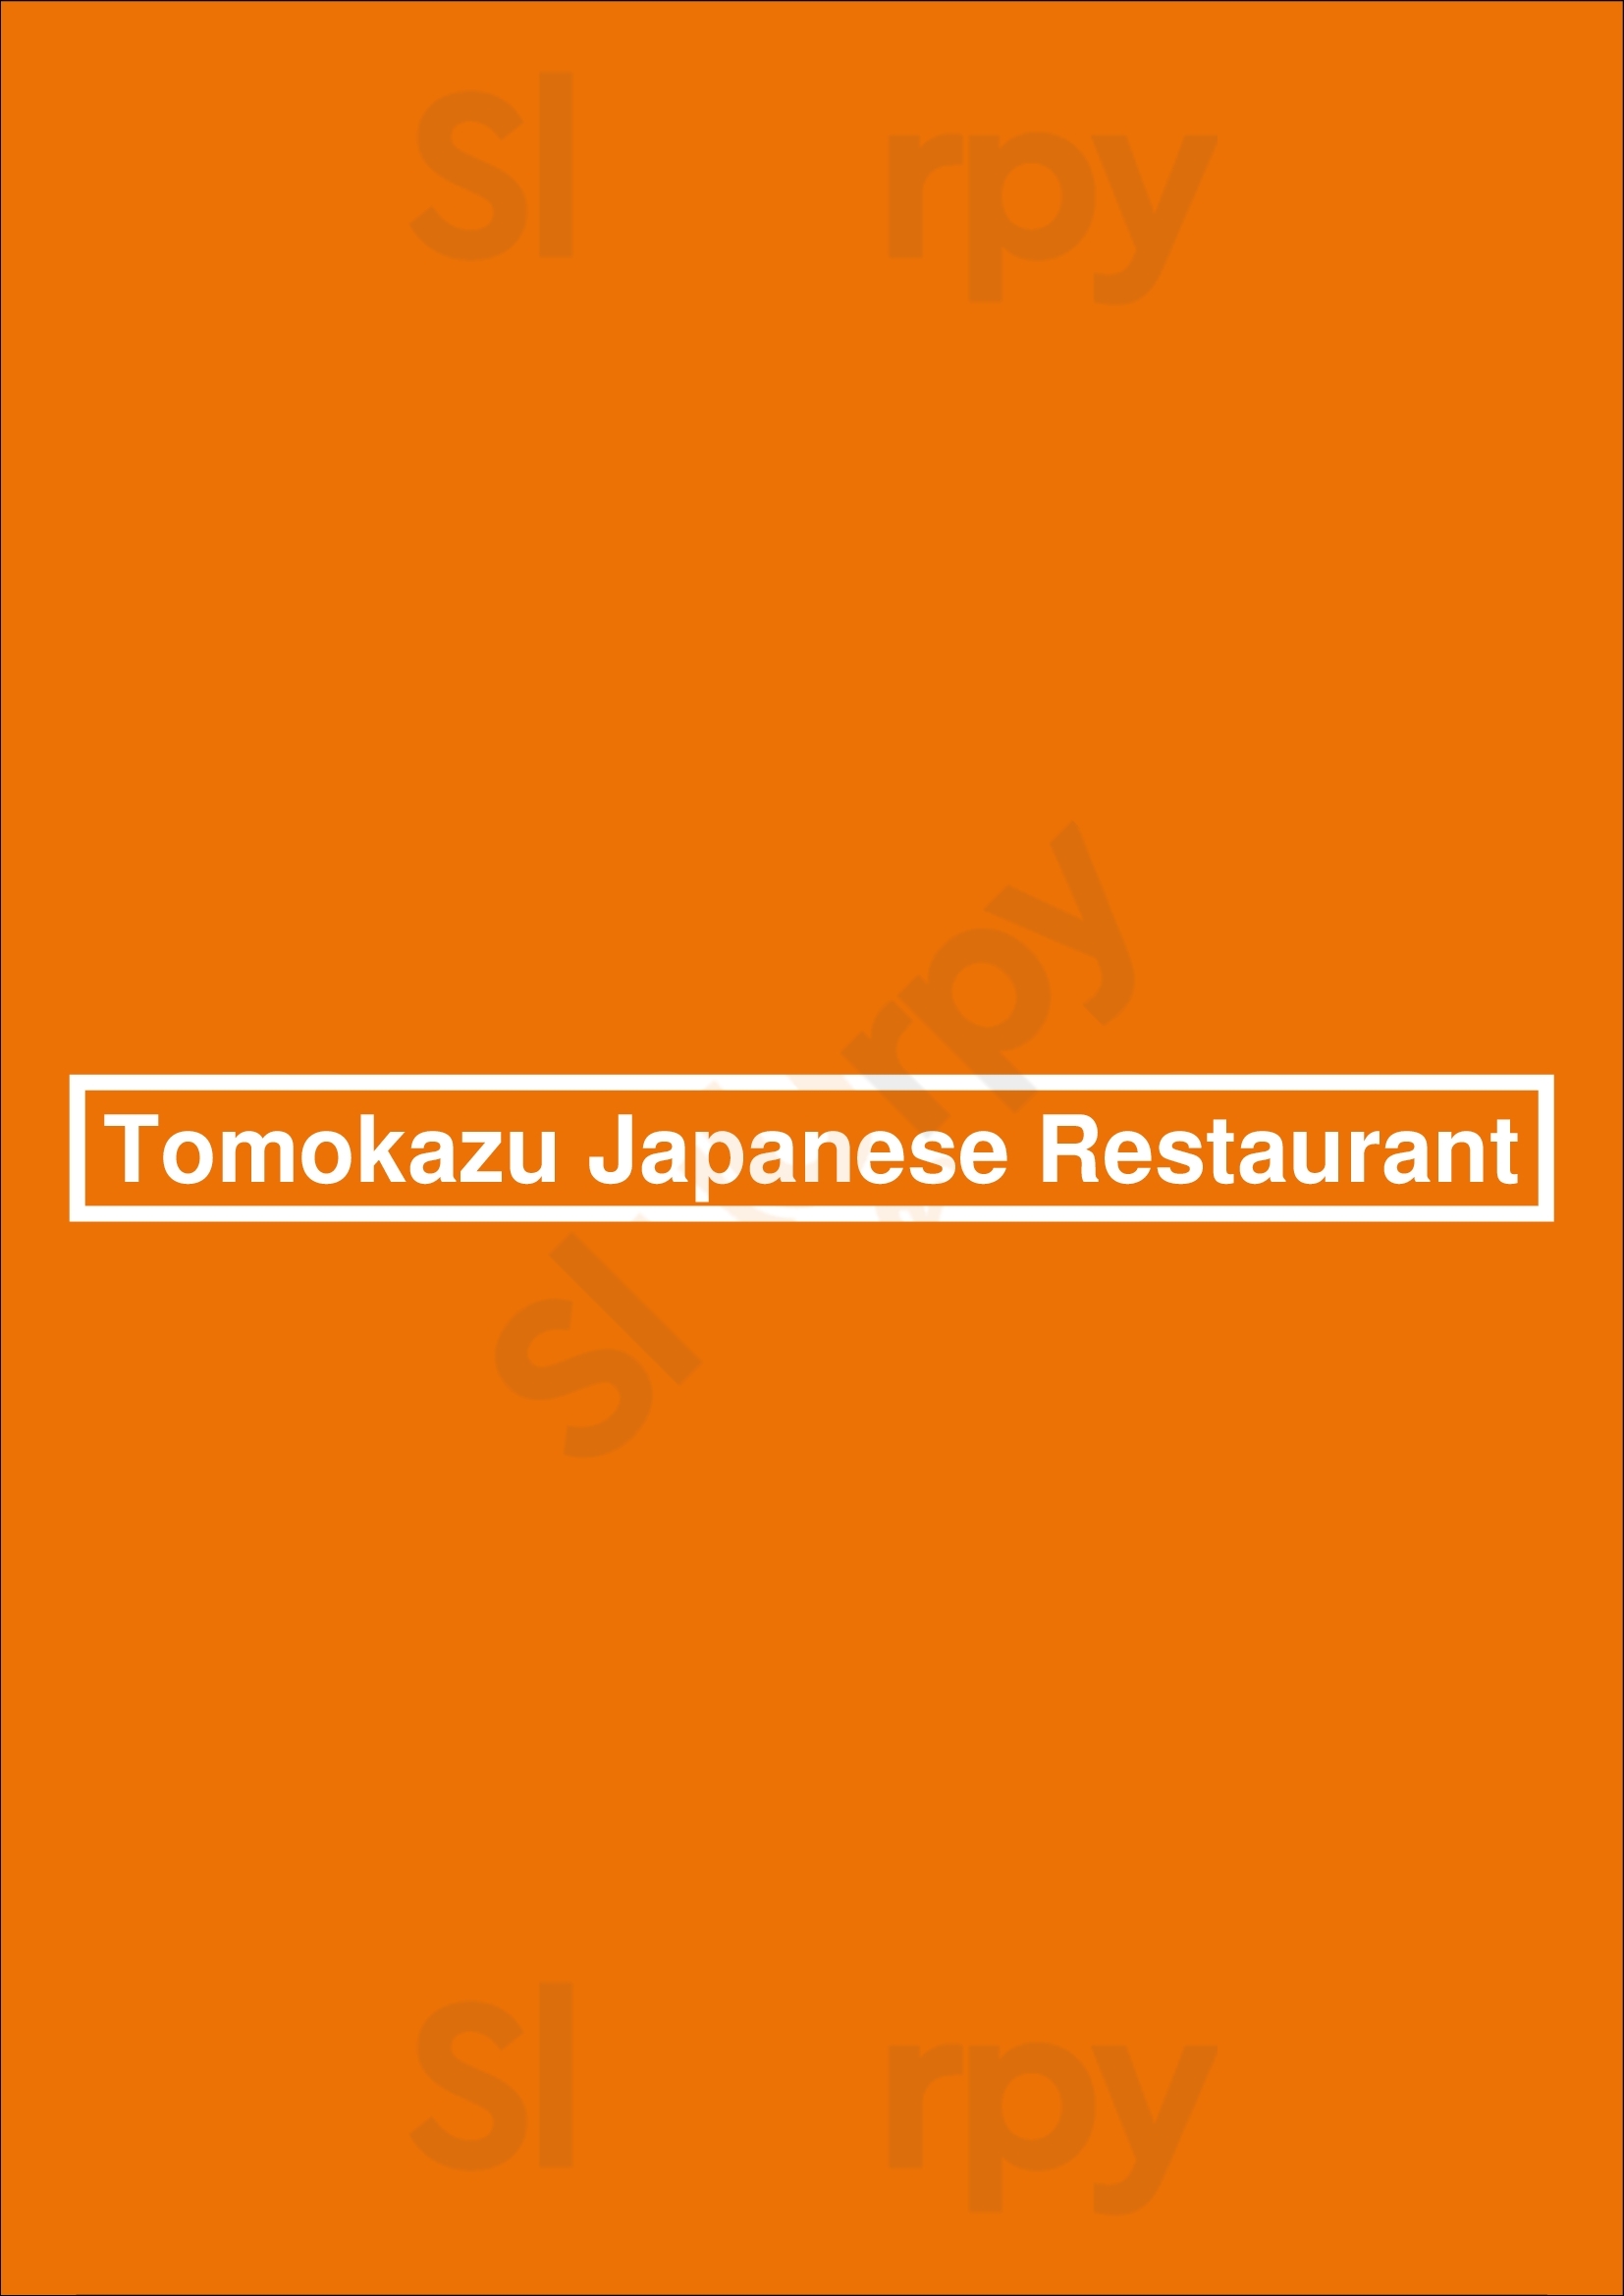 Tomokazu Japanese Restaurant Vancouver Menu - 1